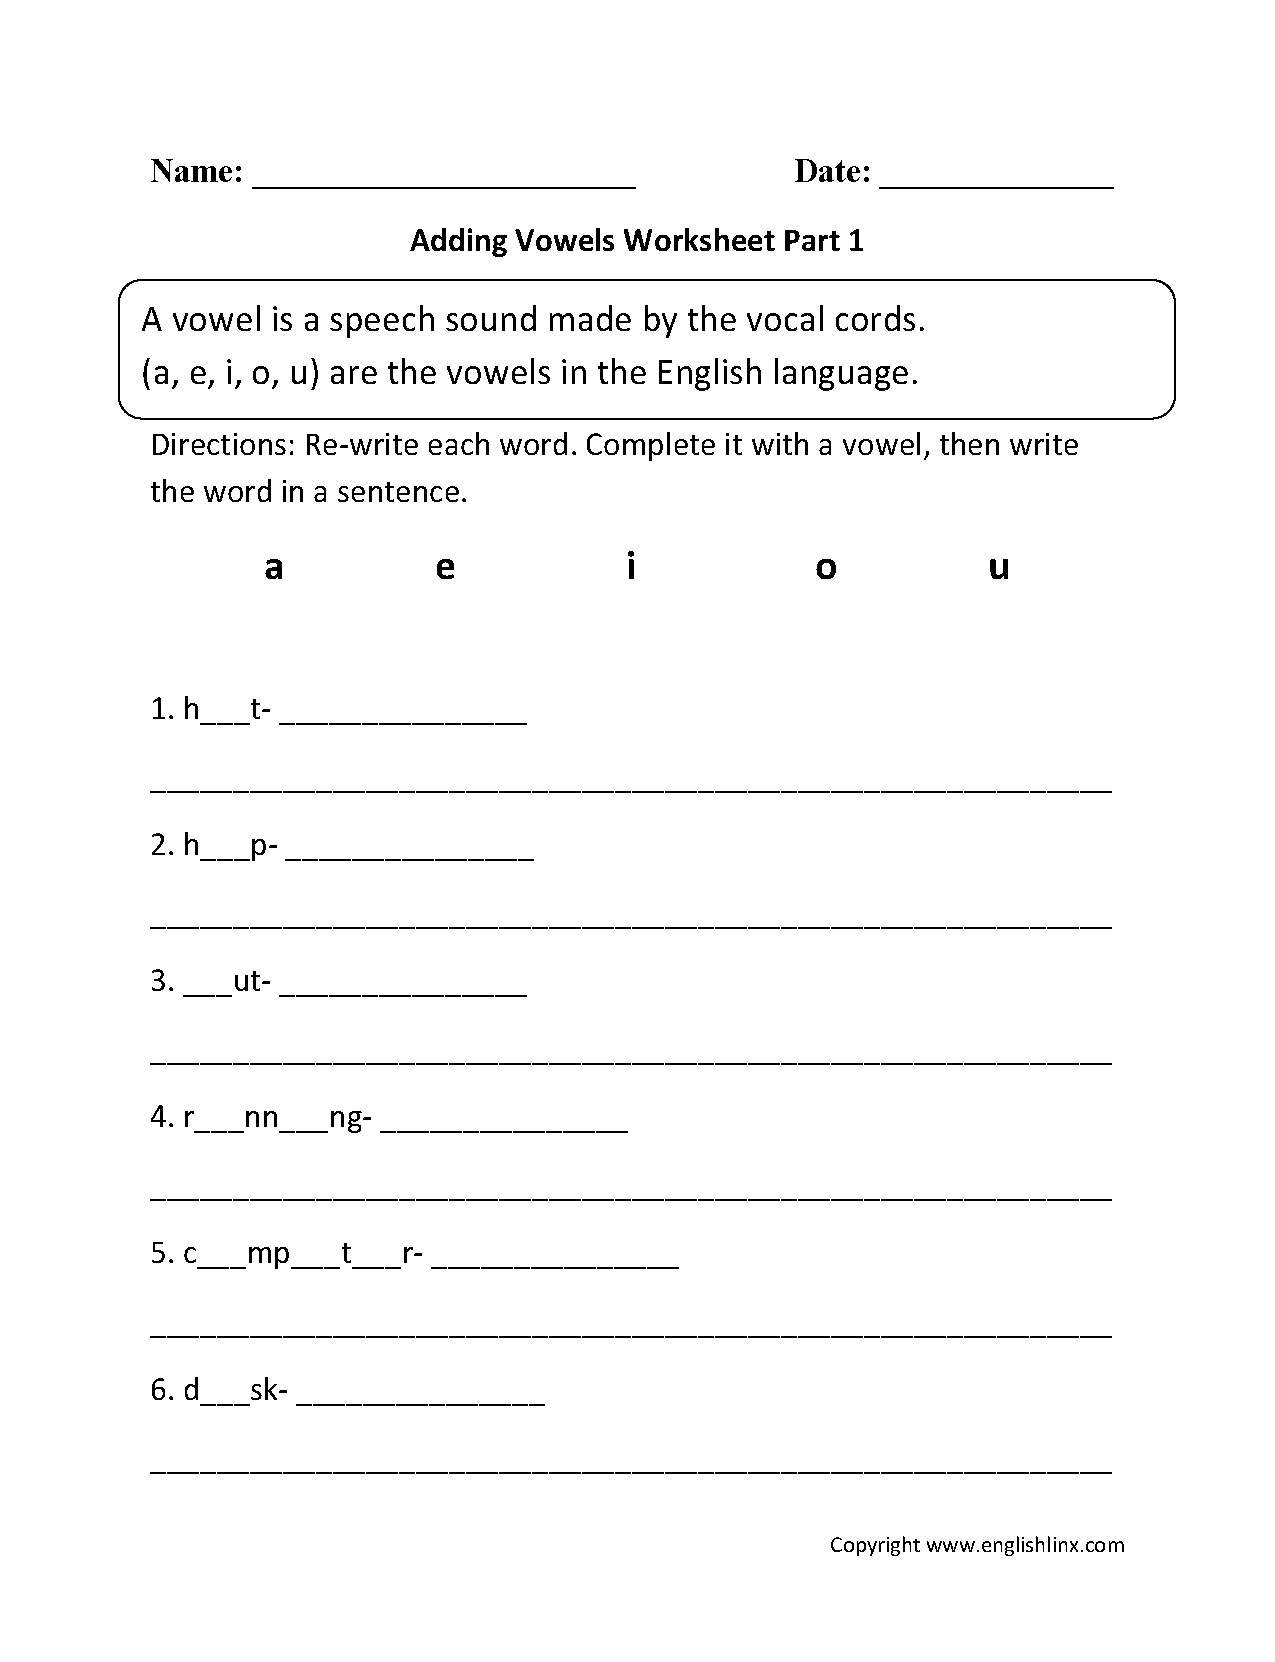 English Worksheets For Vowels